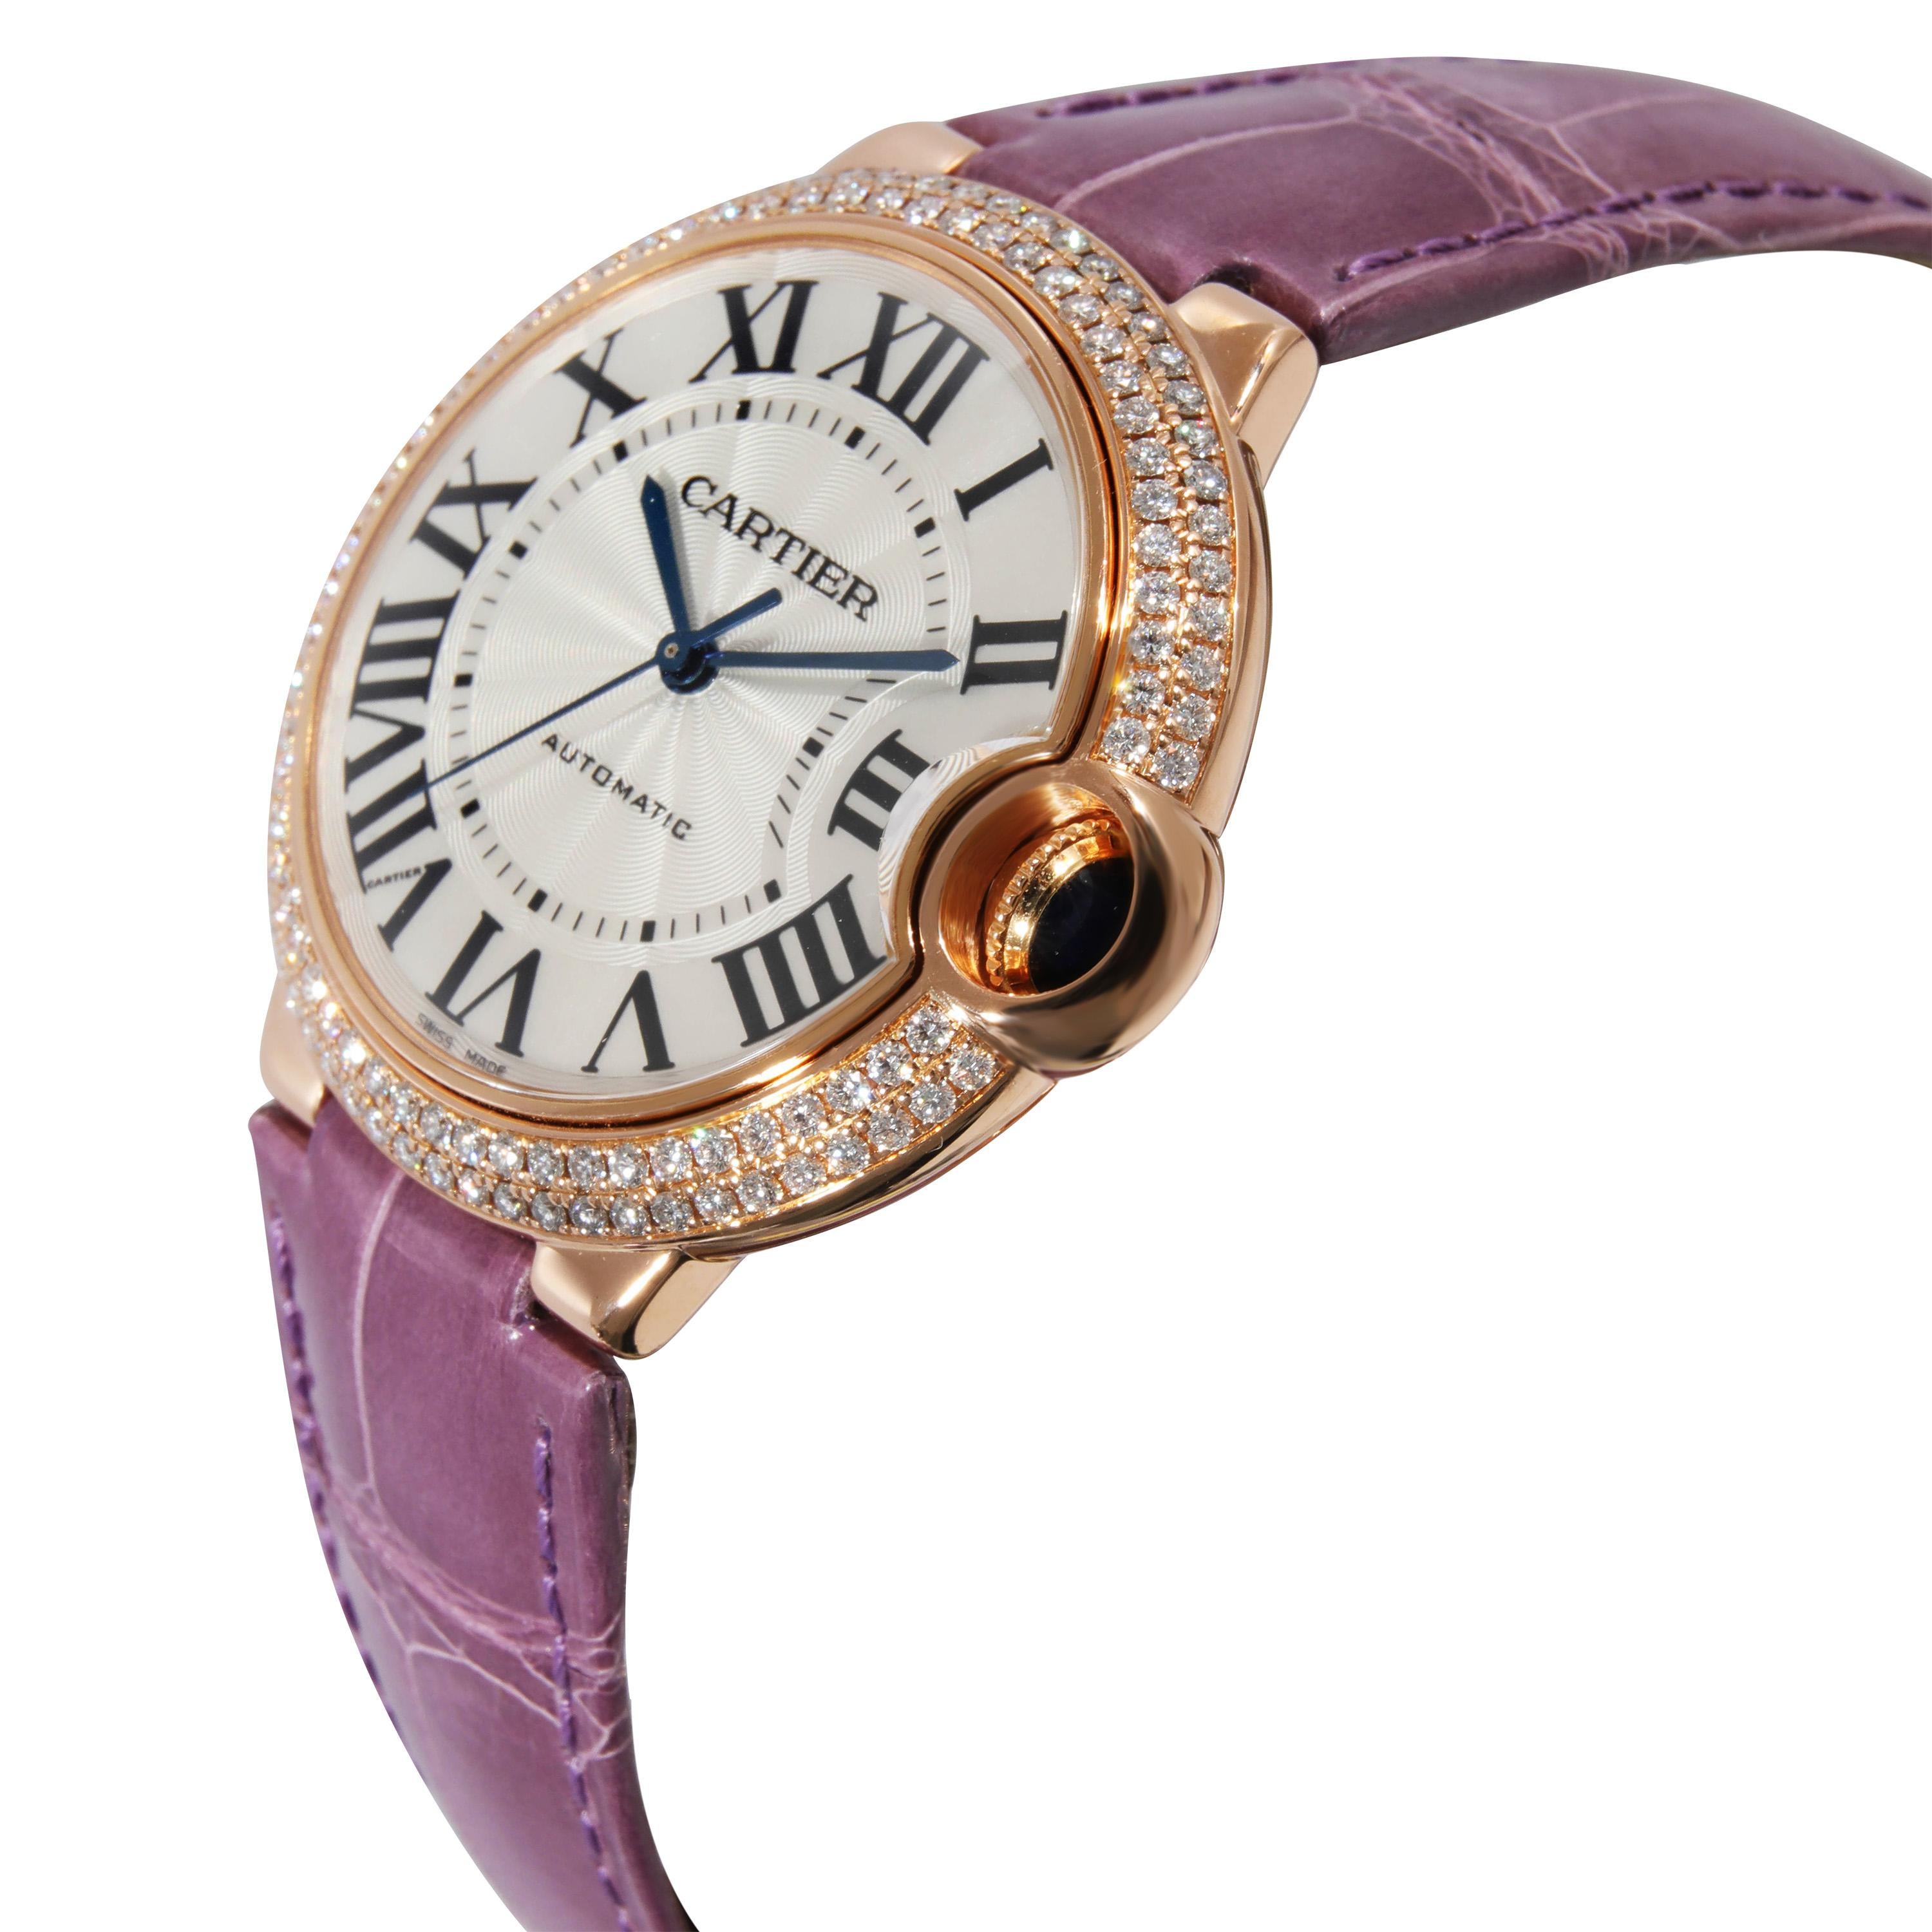 Cartier Ballon Bleu WJBB0009 Unisex-Uhr in 18kt Rose Gold im Angebot 1